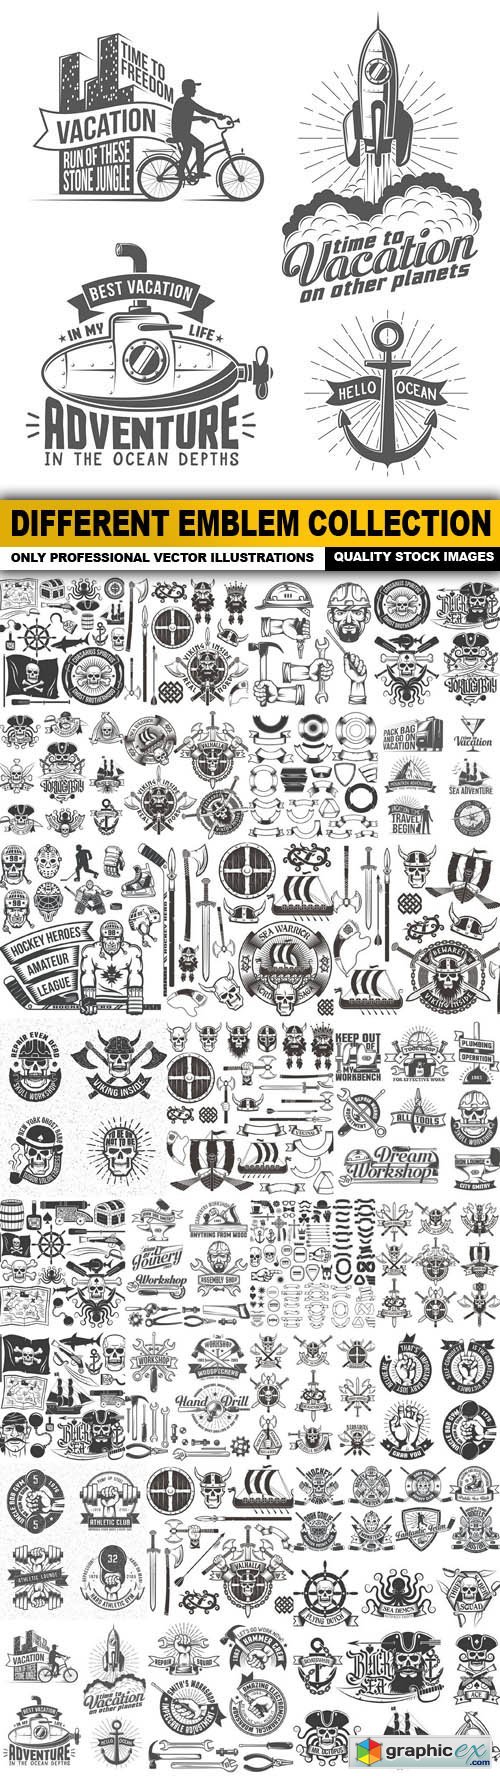 Different Emblem Collection - 34 Vector